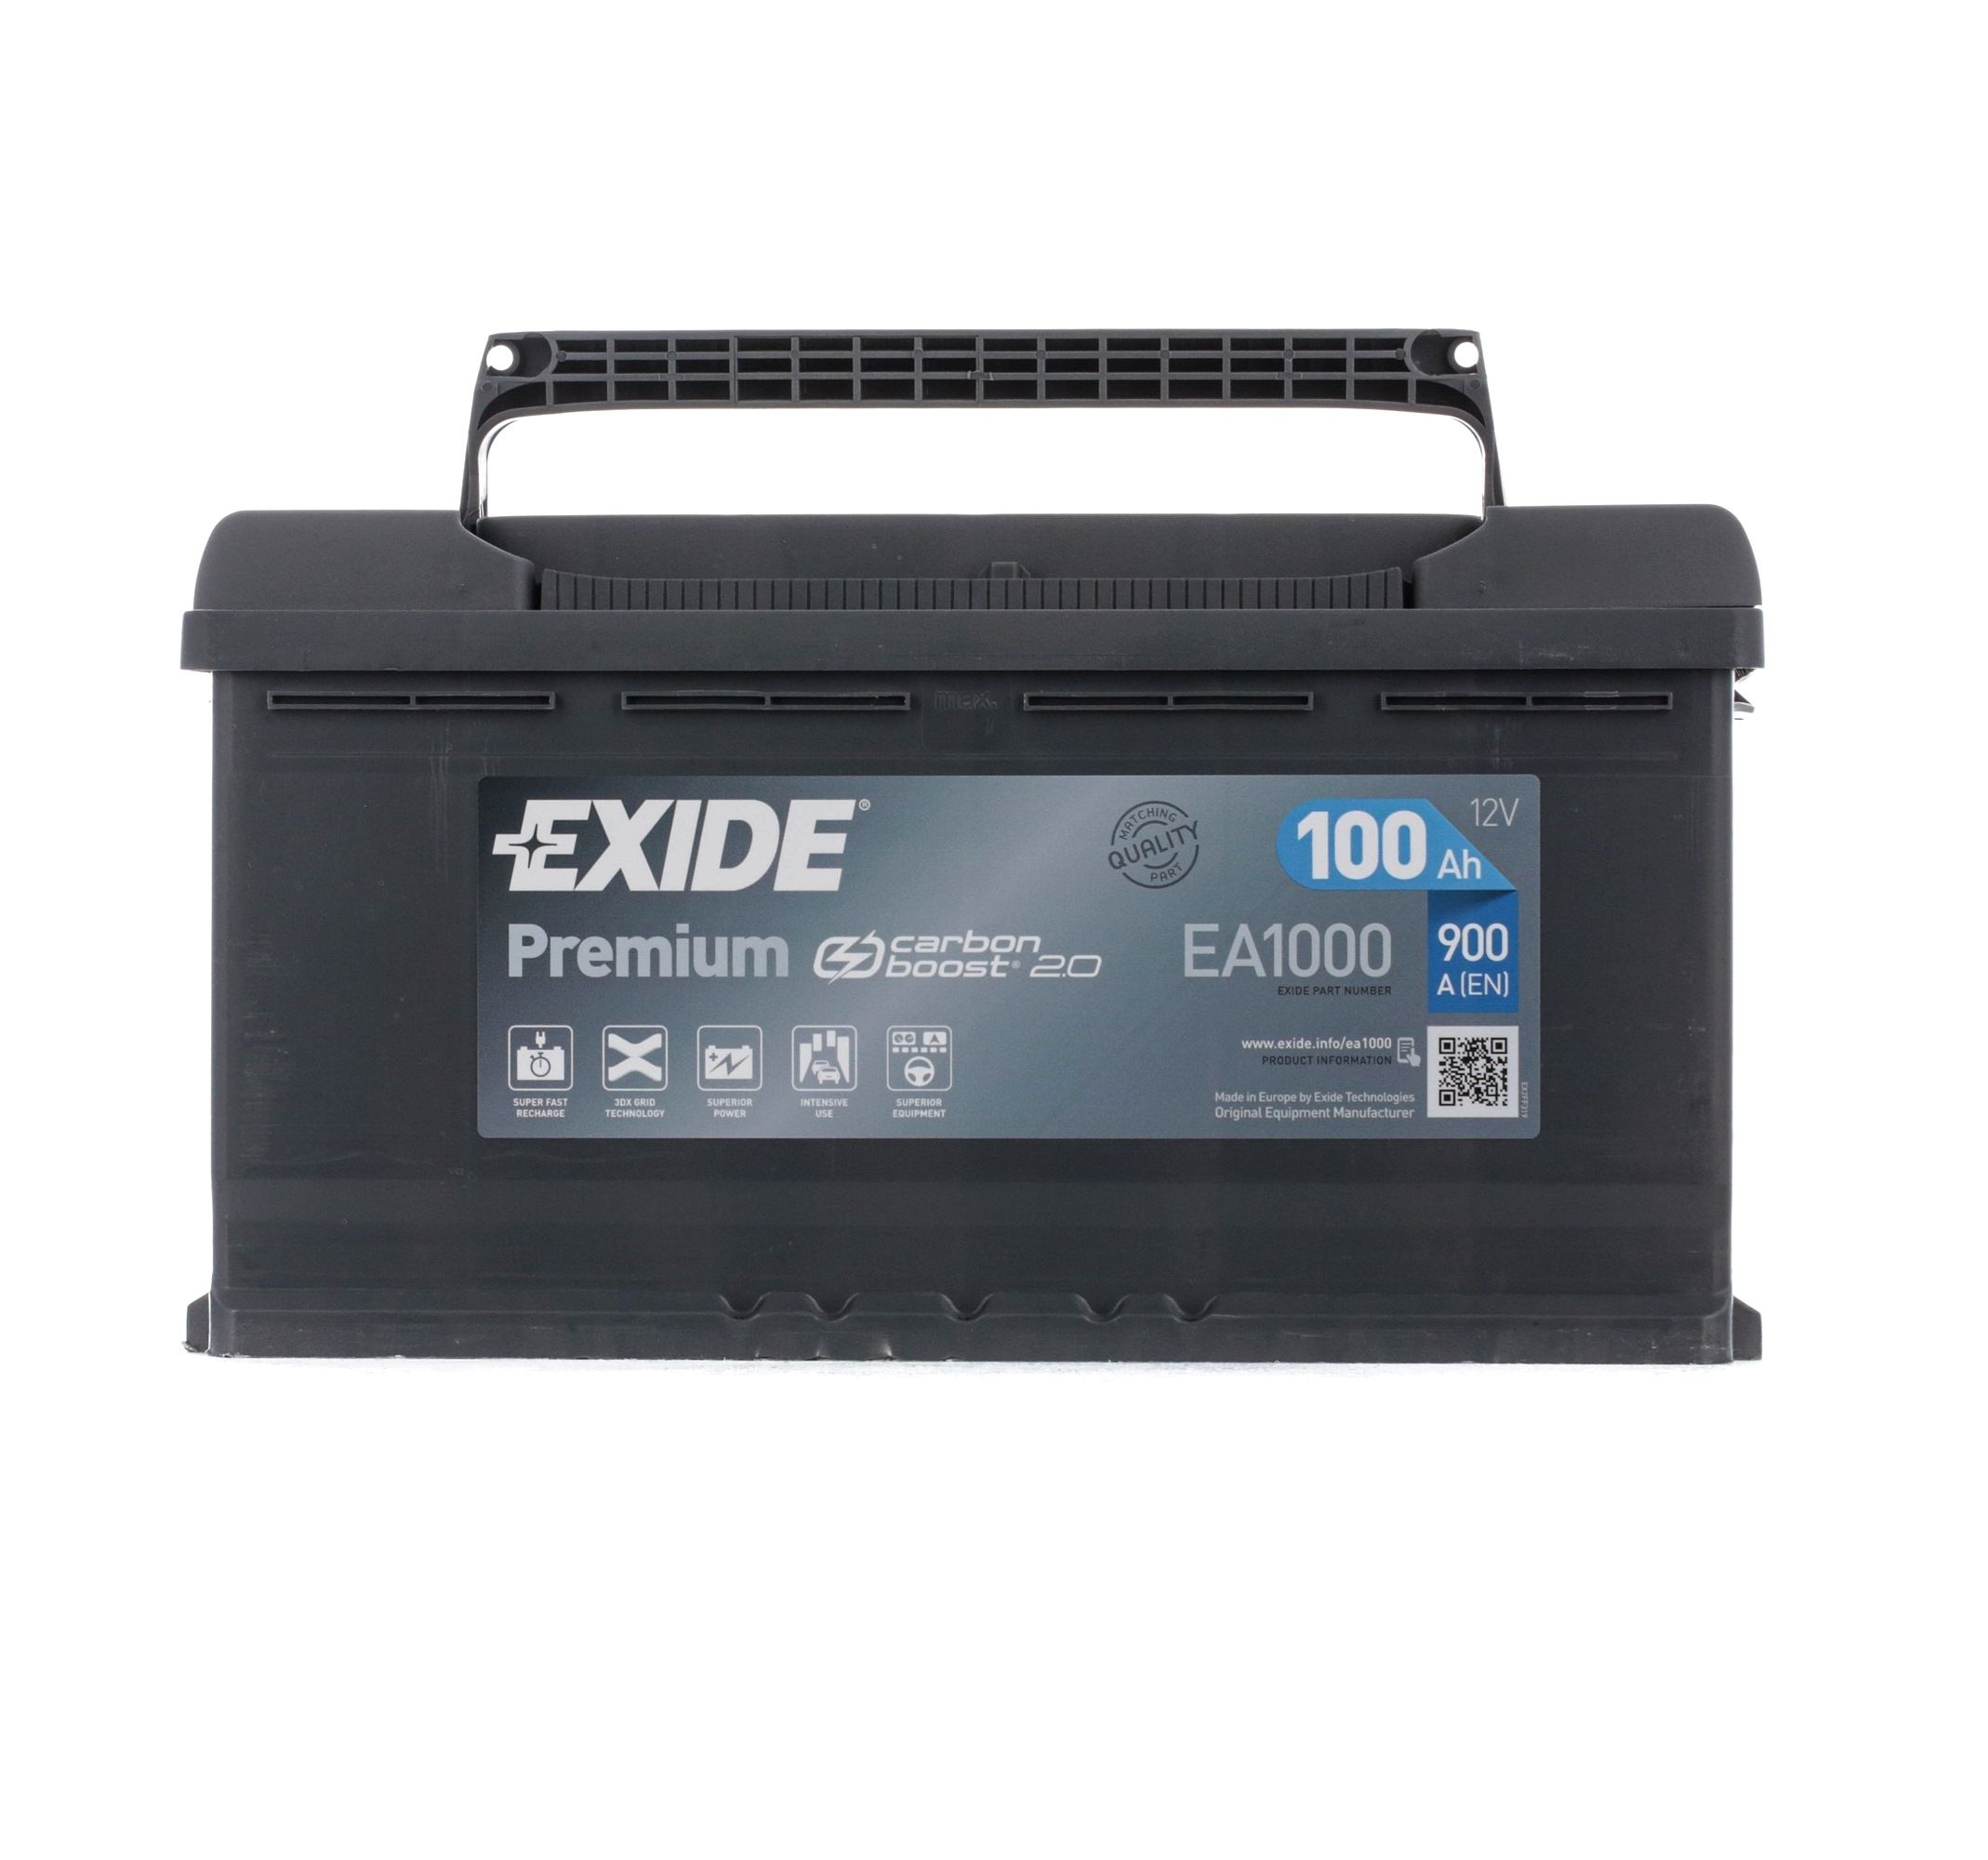 EXIDE EA1000 RENAULT Starterbatterie 12V 100Ah 900A B13 Bleiakkumulator